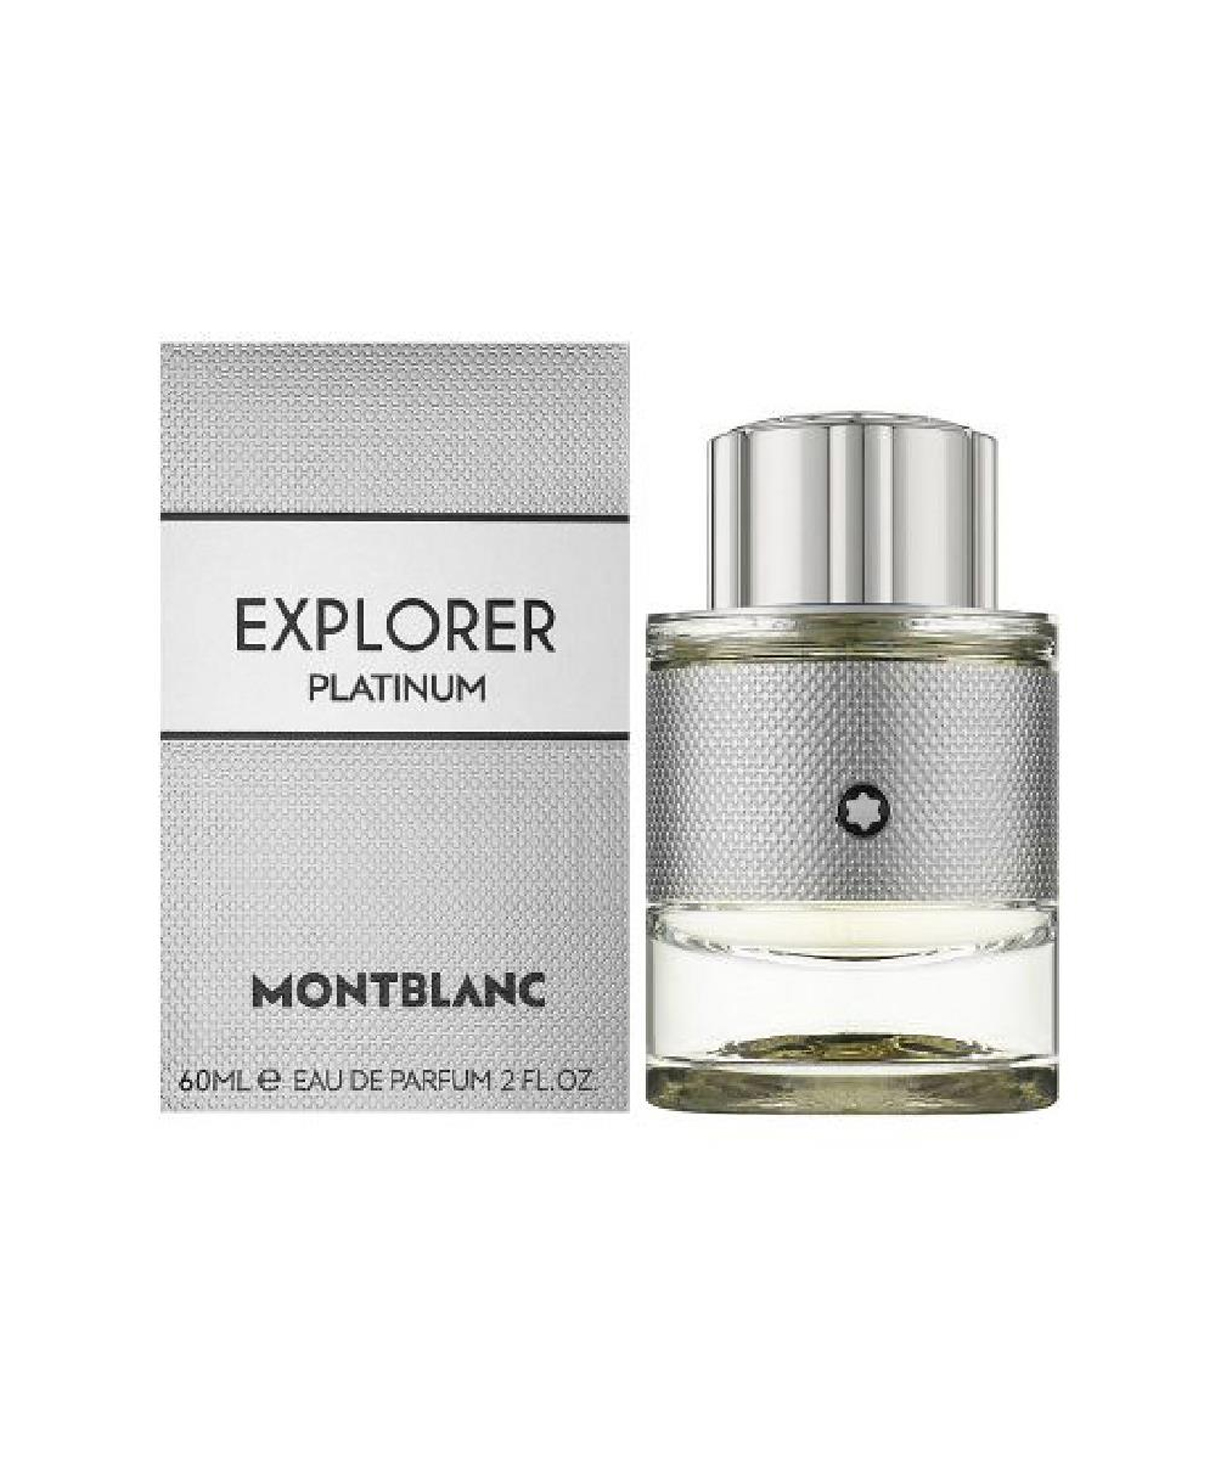 Парфюм «Montblanc» Explorer Platinum, мужской, 60 мл